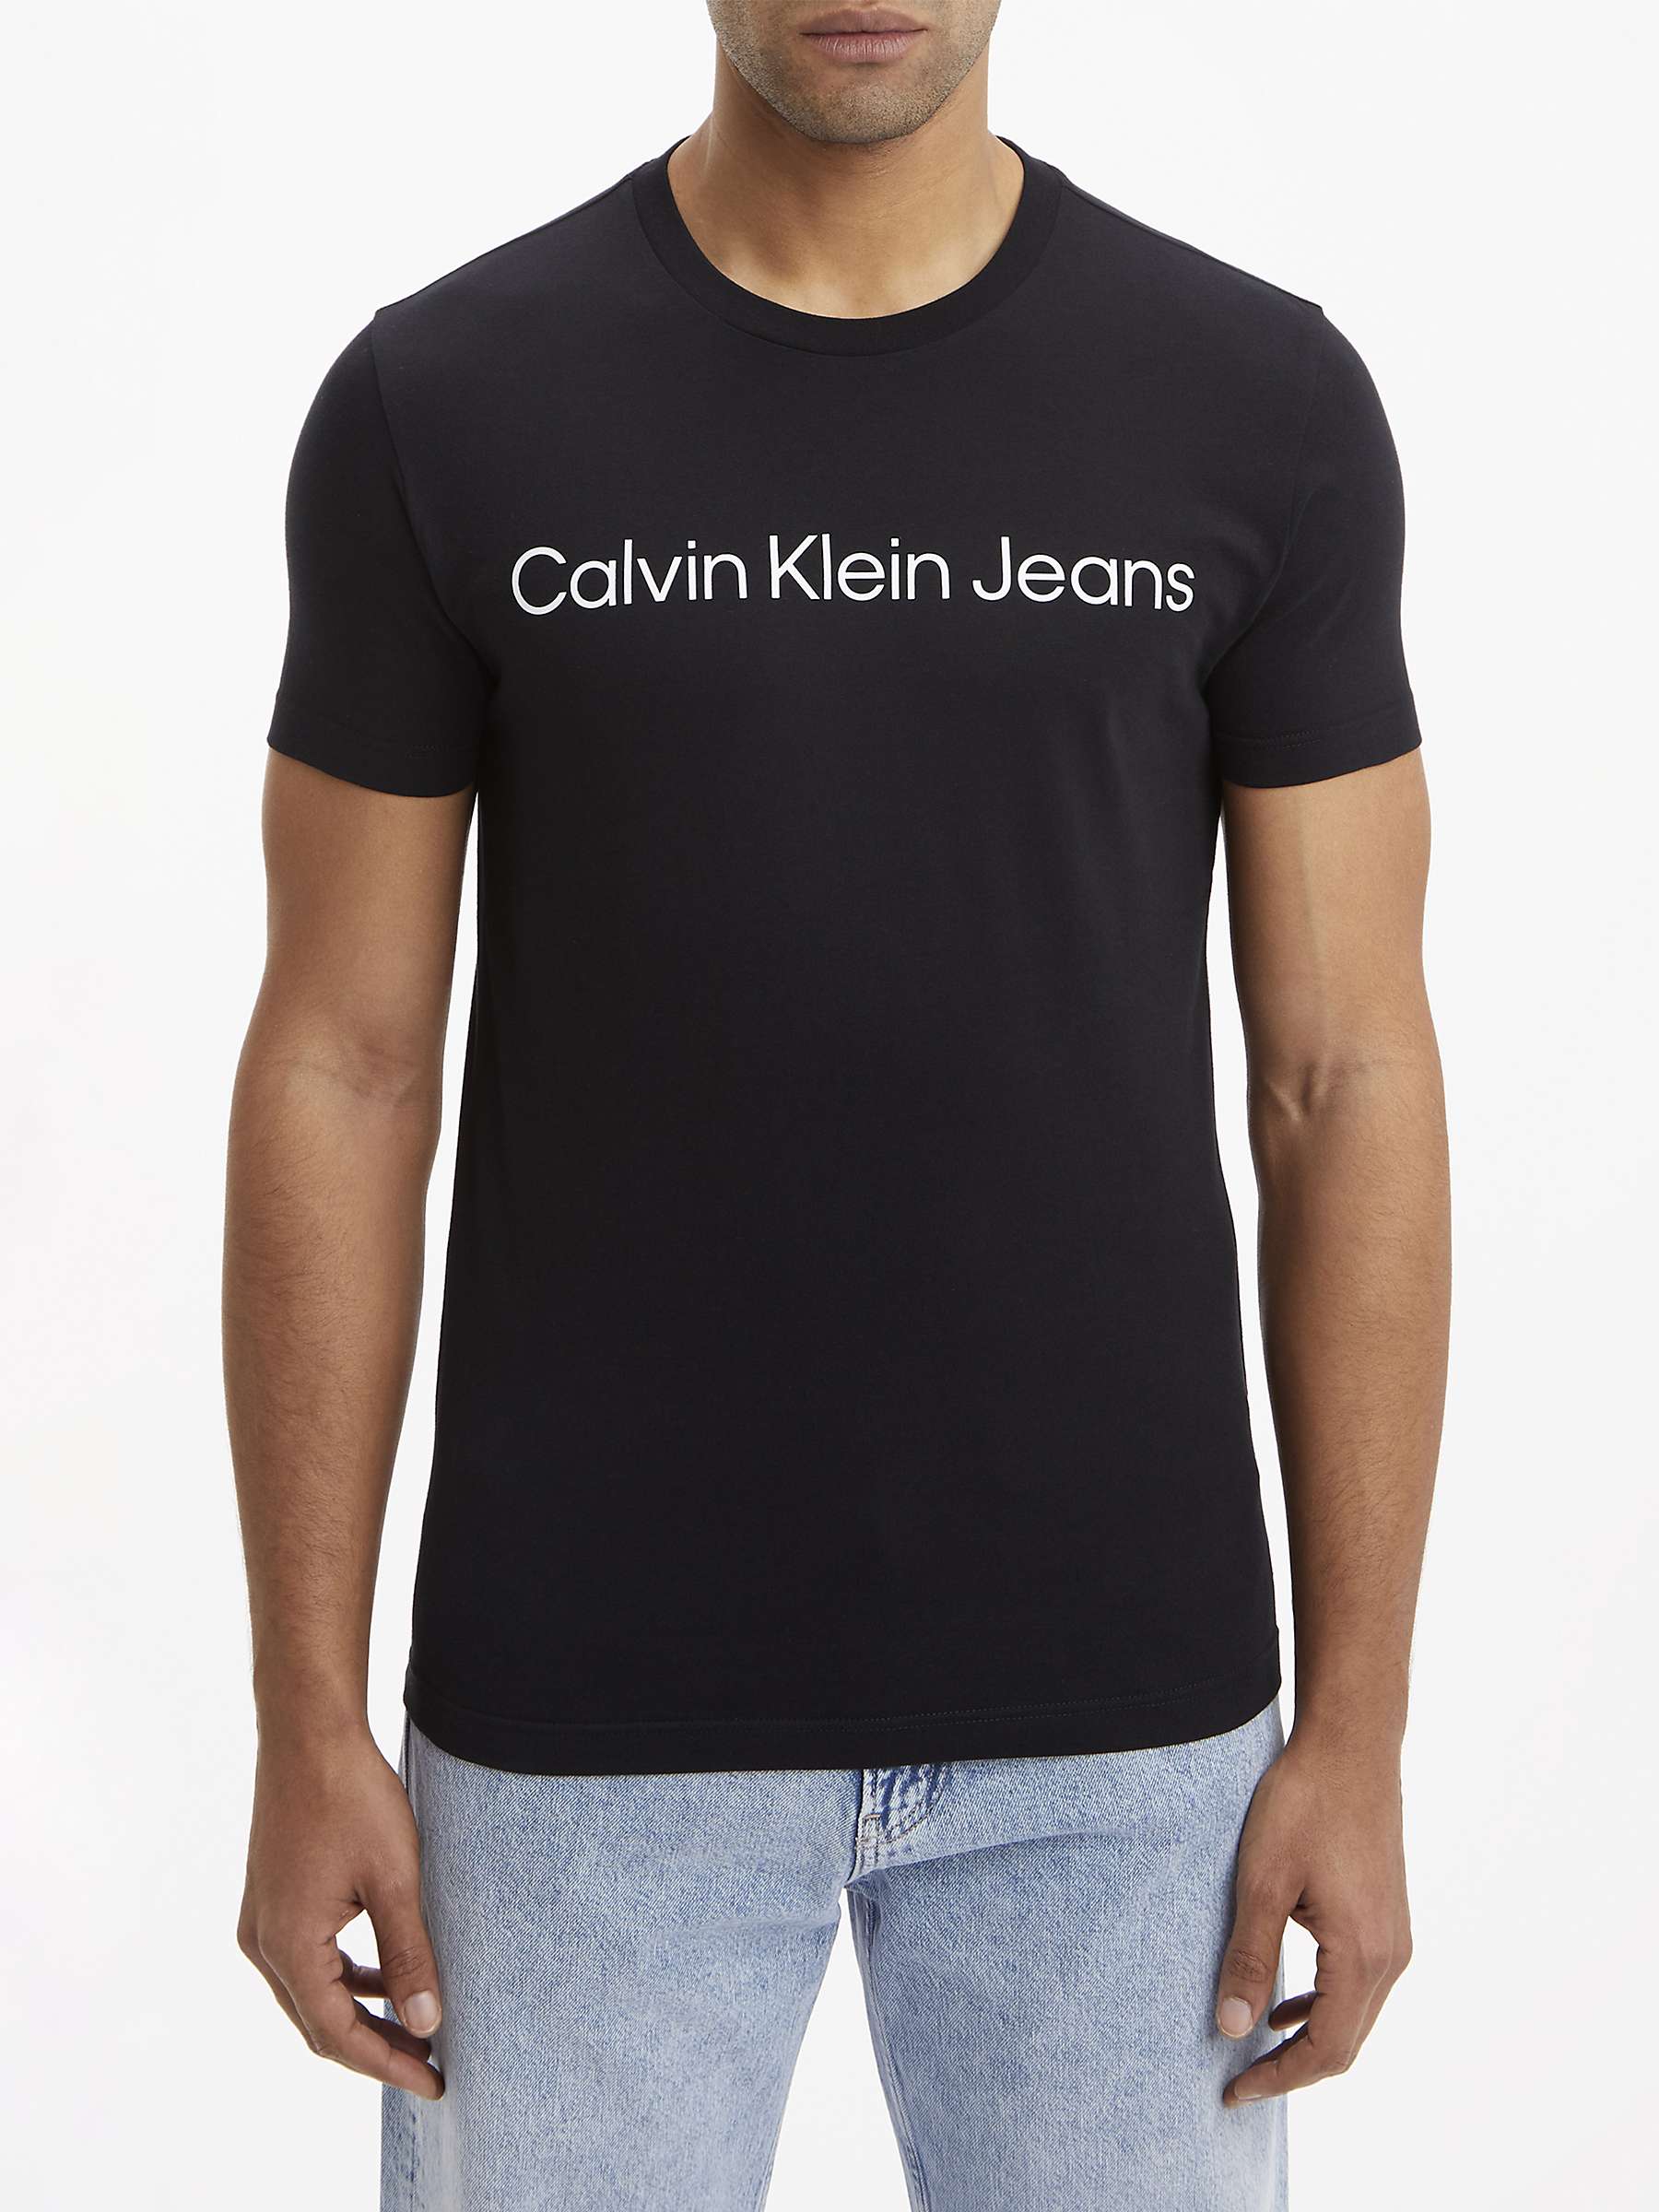 Calvin Klein Jeans Core Logo T-Shirt, Ck Black at John Lewis & Partners